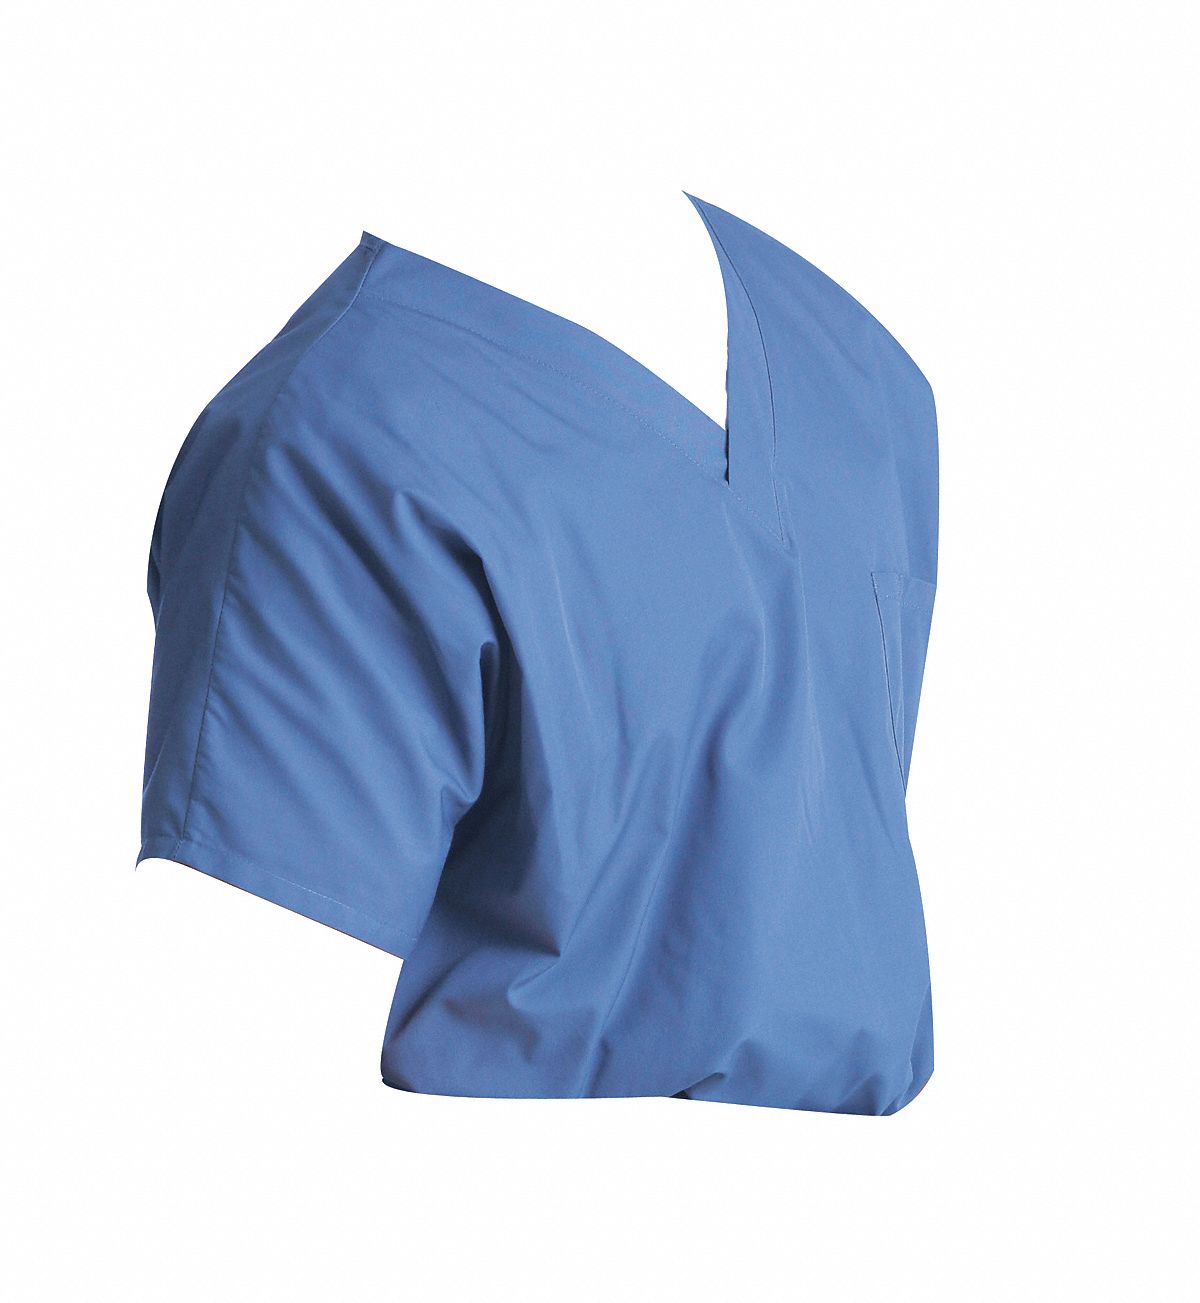 Ceil Blue Scrub Shirt Xl Polyester Cotton Fits Waist Size 39 To 42